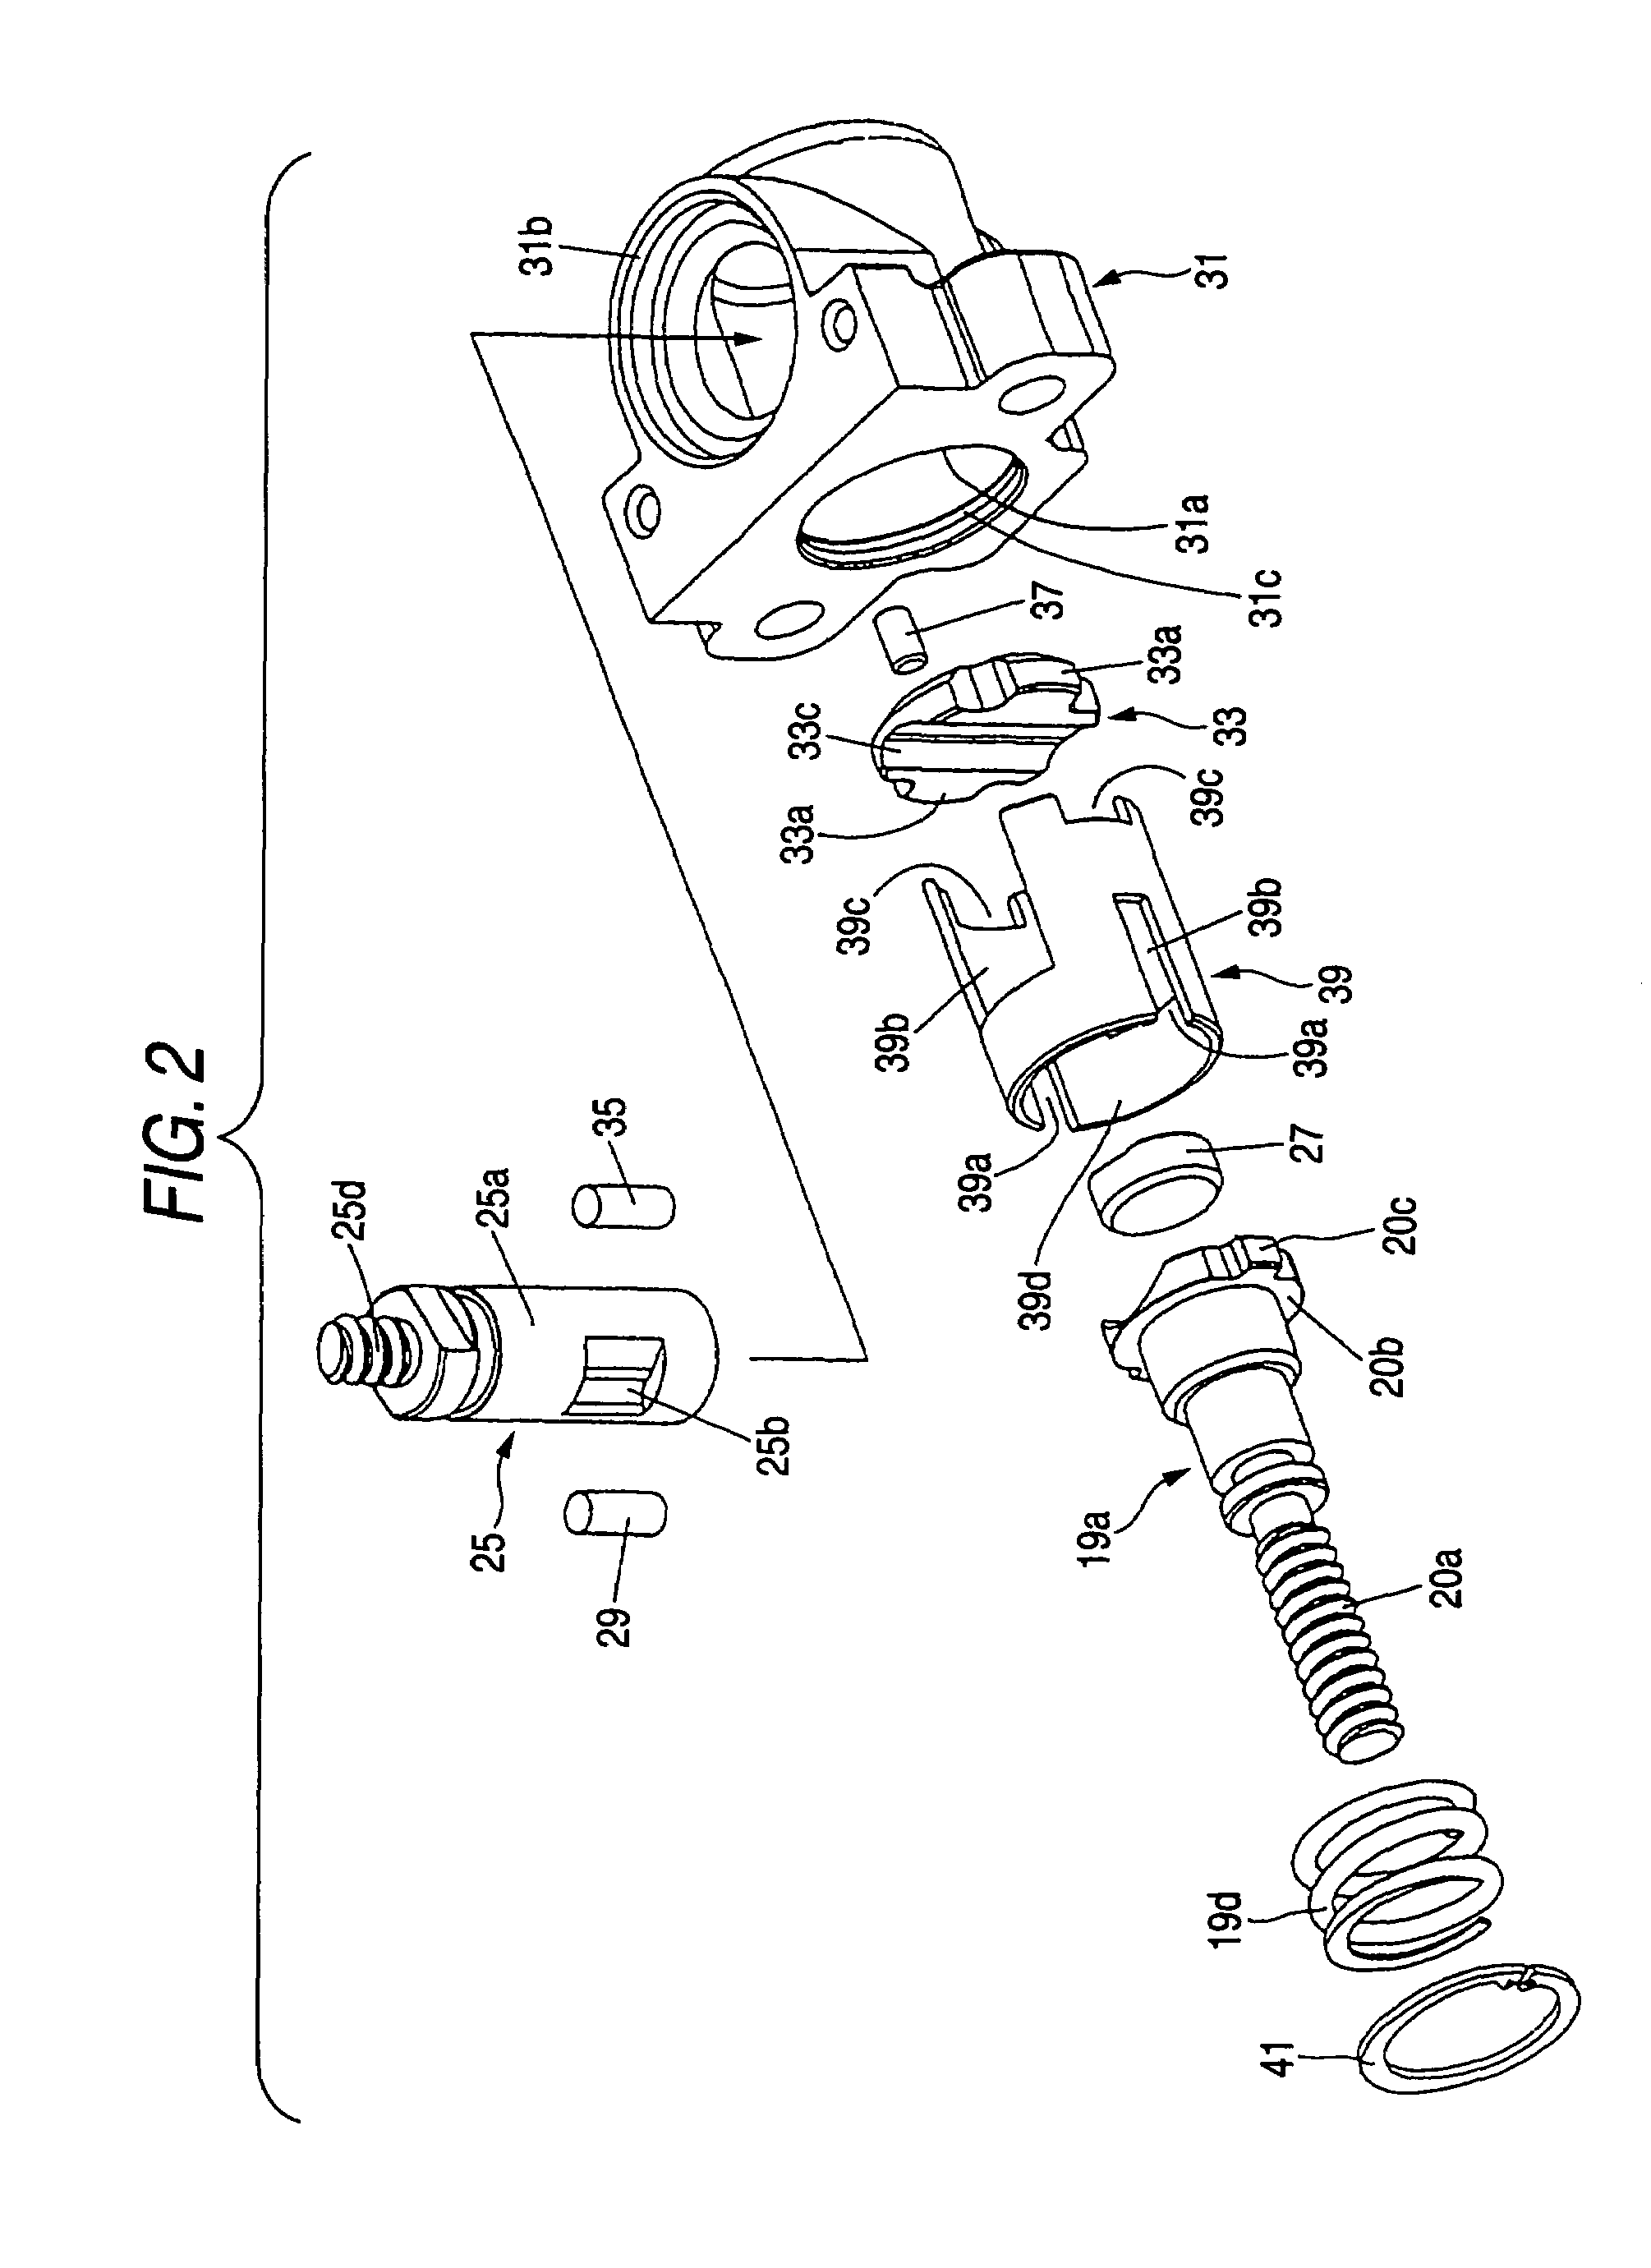 Disc brake actuating apparatus with parking-brake operating mechanism